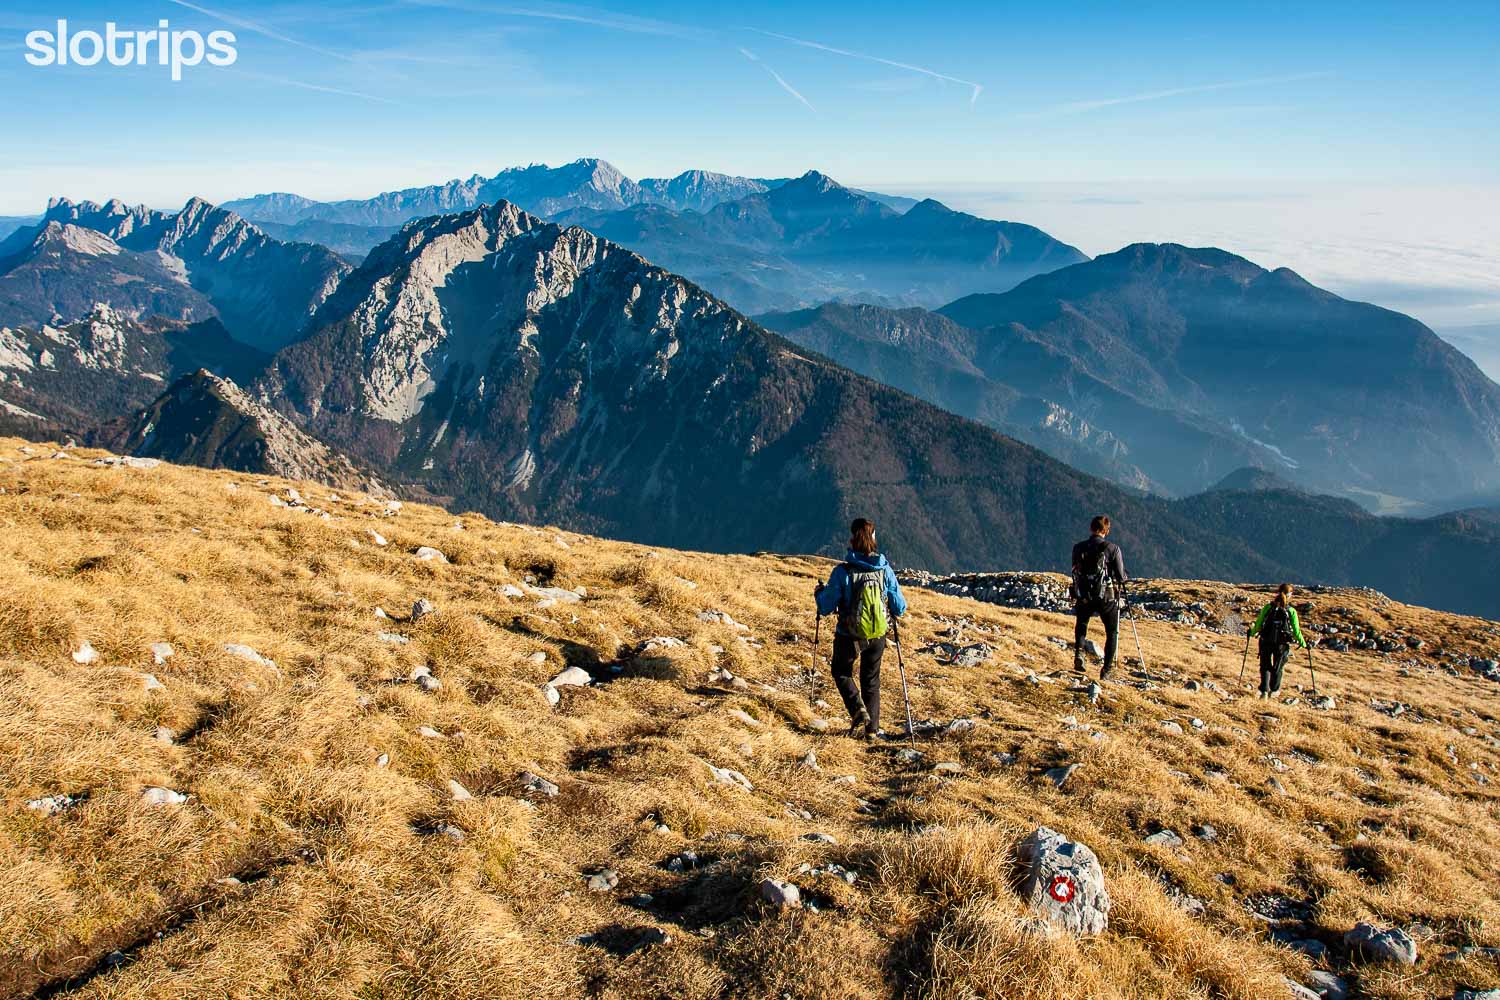 Hikers on Mt. Stol in Karawanke mountain chain, Slovenia